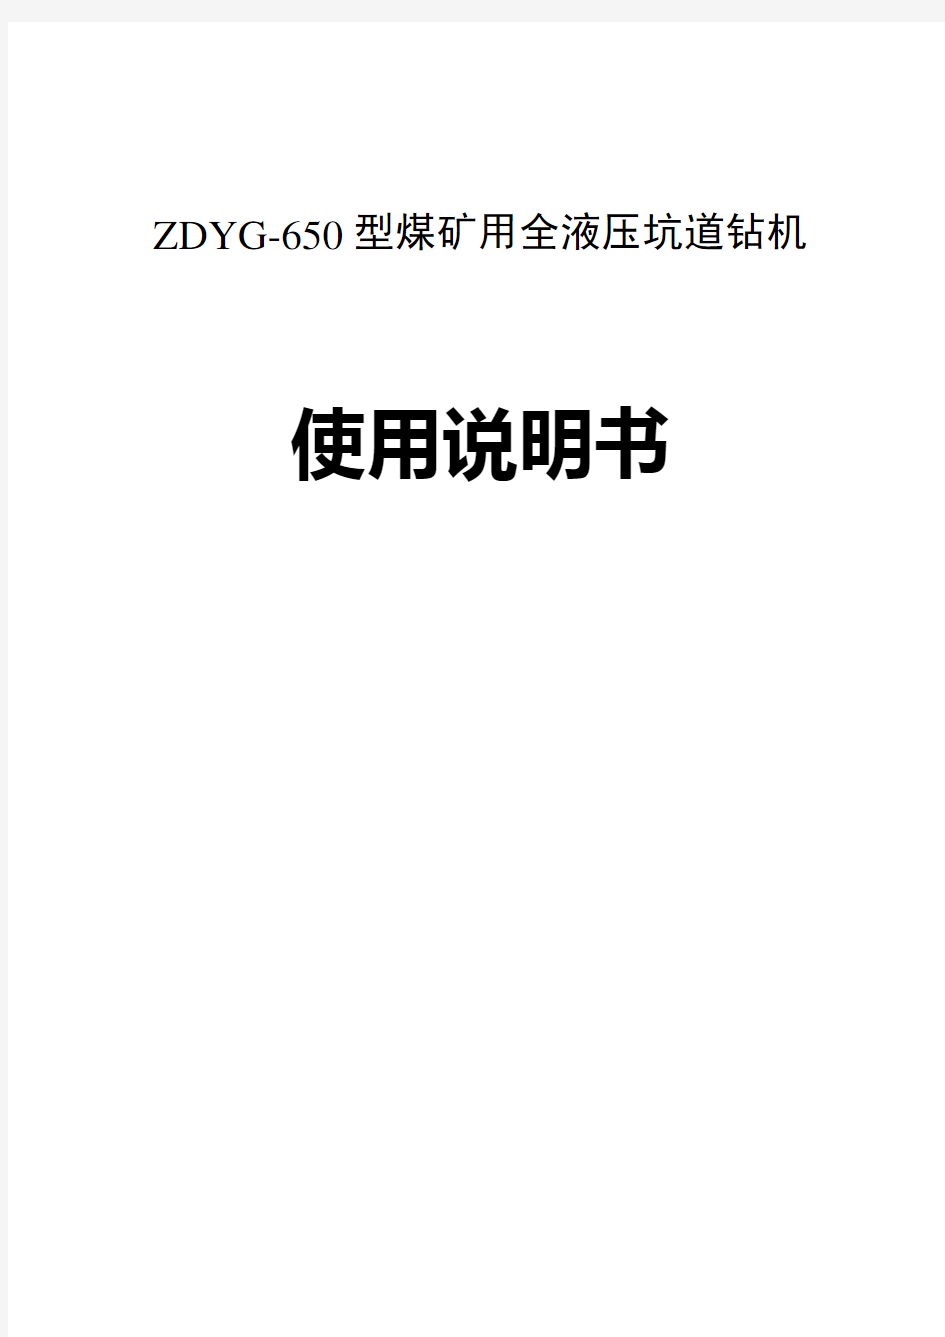 ZDYG-650型钻机使用说明书